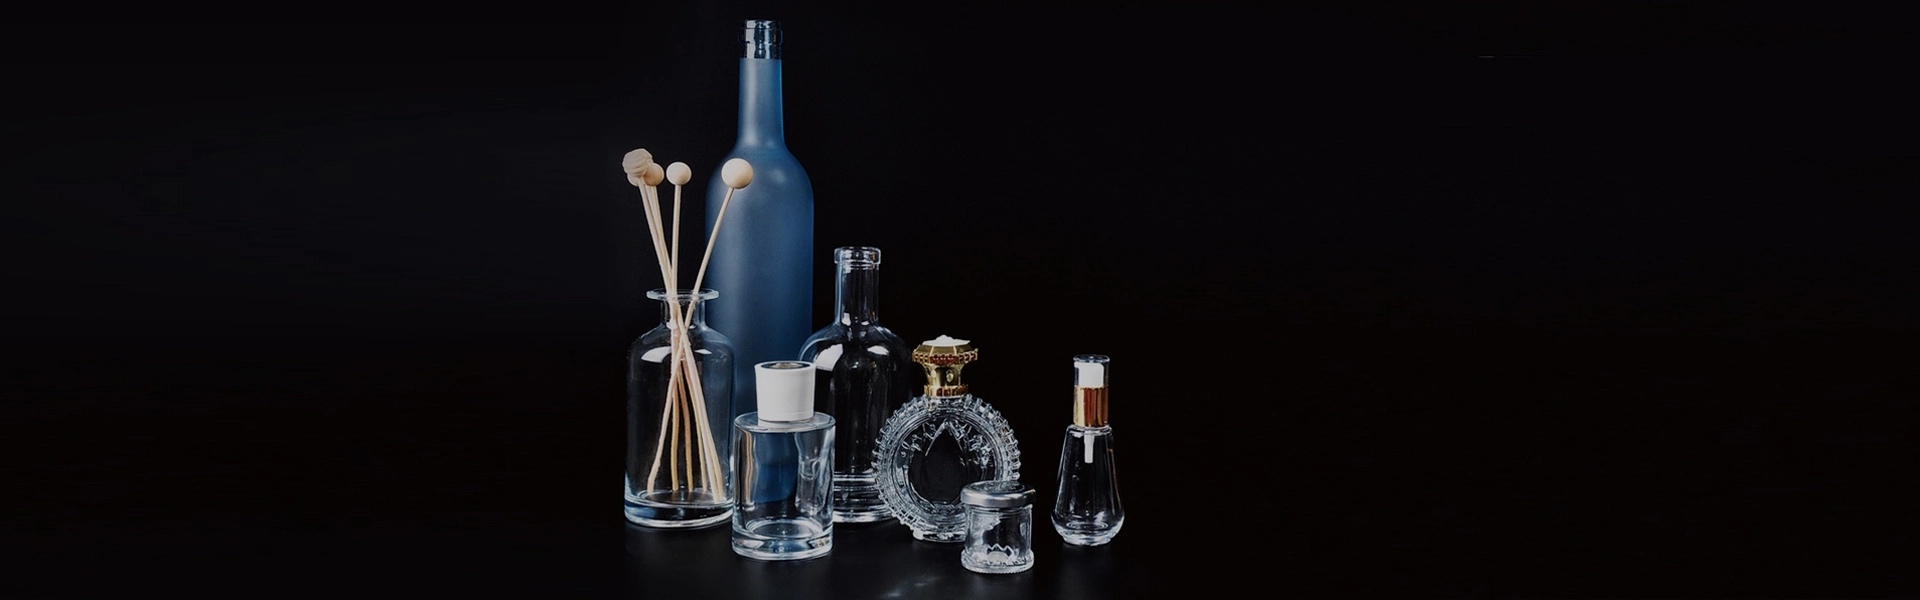 XLDFW-015 50ml Transparent Glass Spirits Bottle